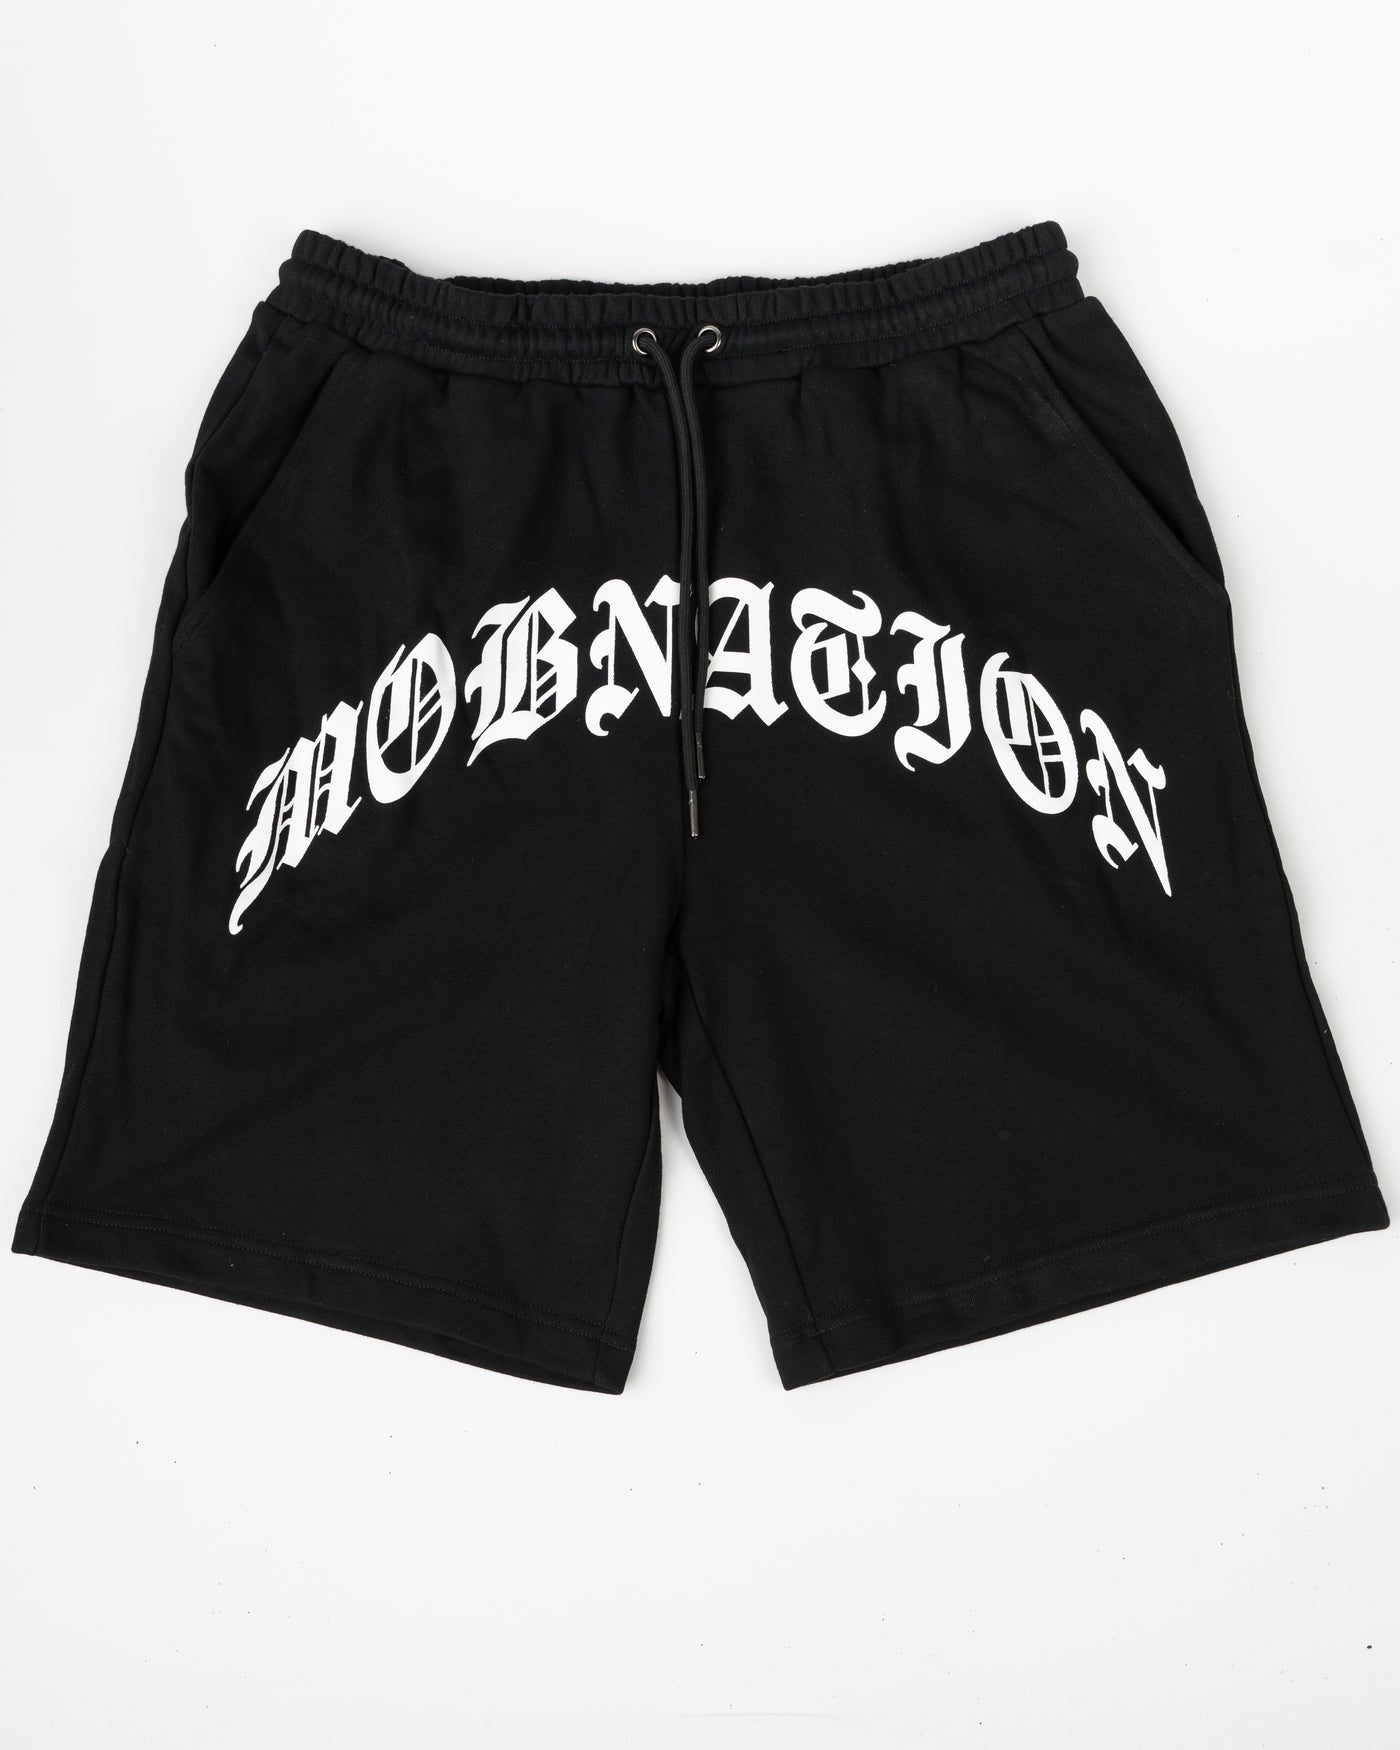 Black arched shorts – Mob Nation